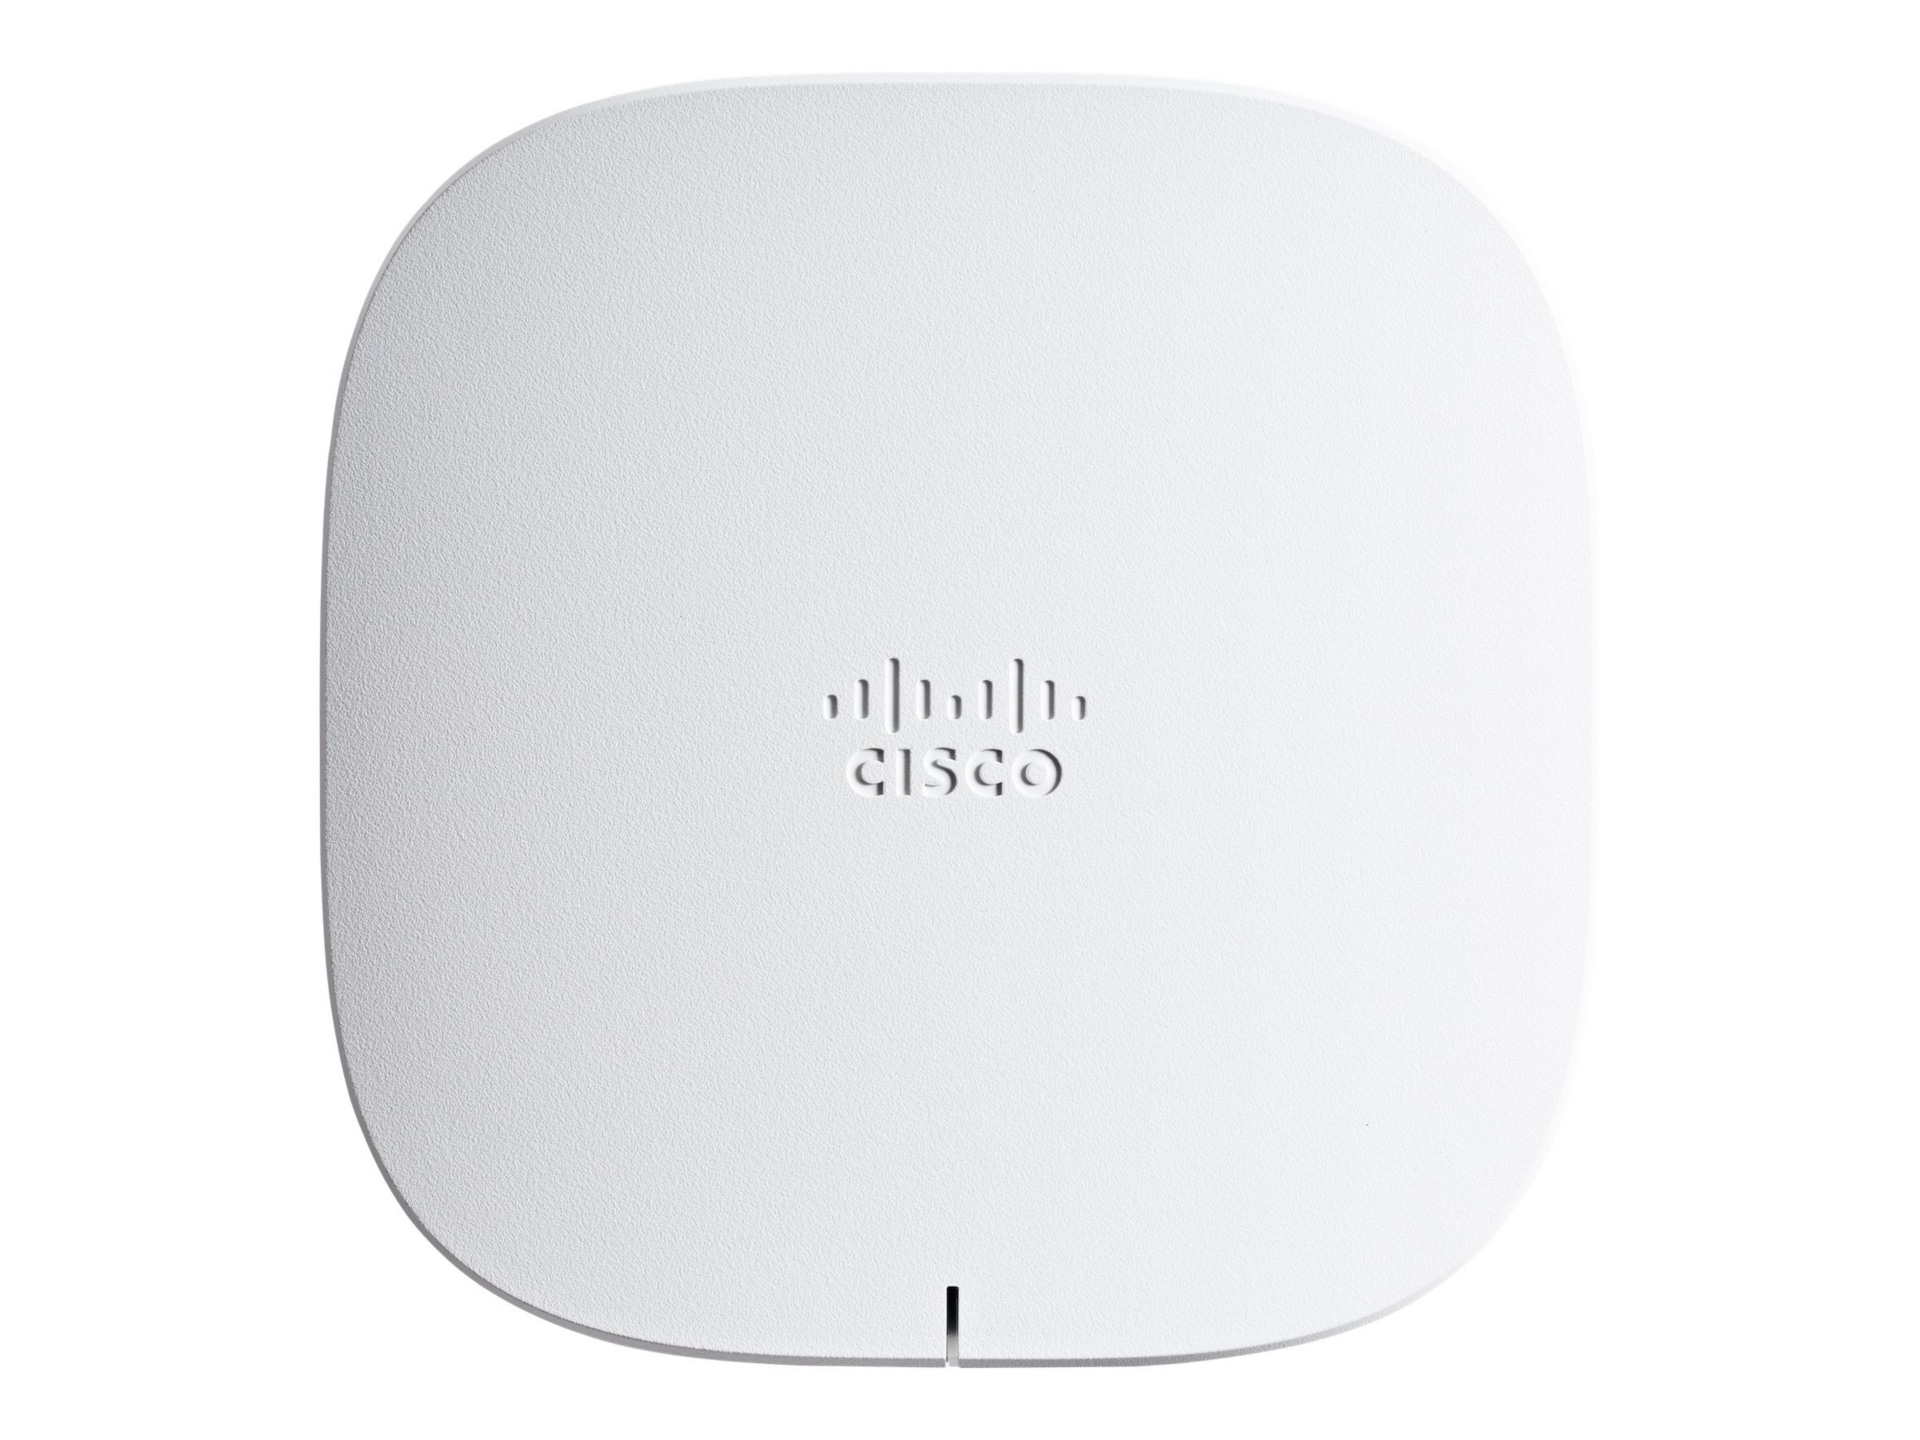 Cisco Business 150AX - wireless access point - Bluetooth, 802.11a/b/gcc